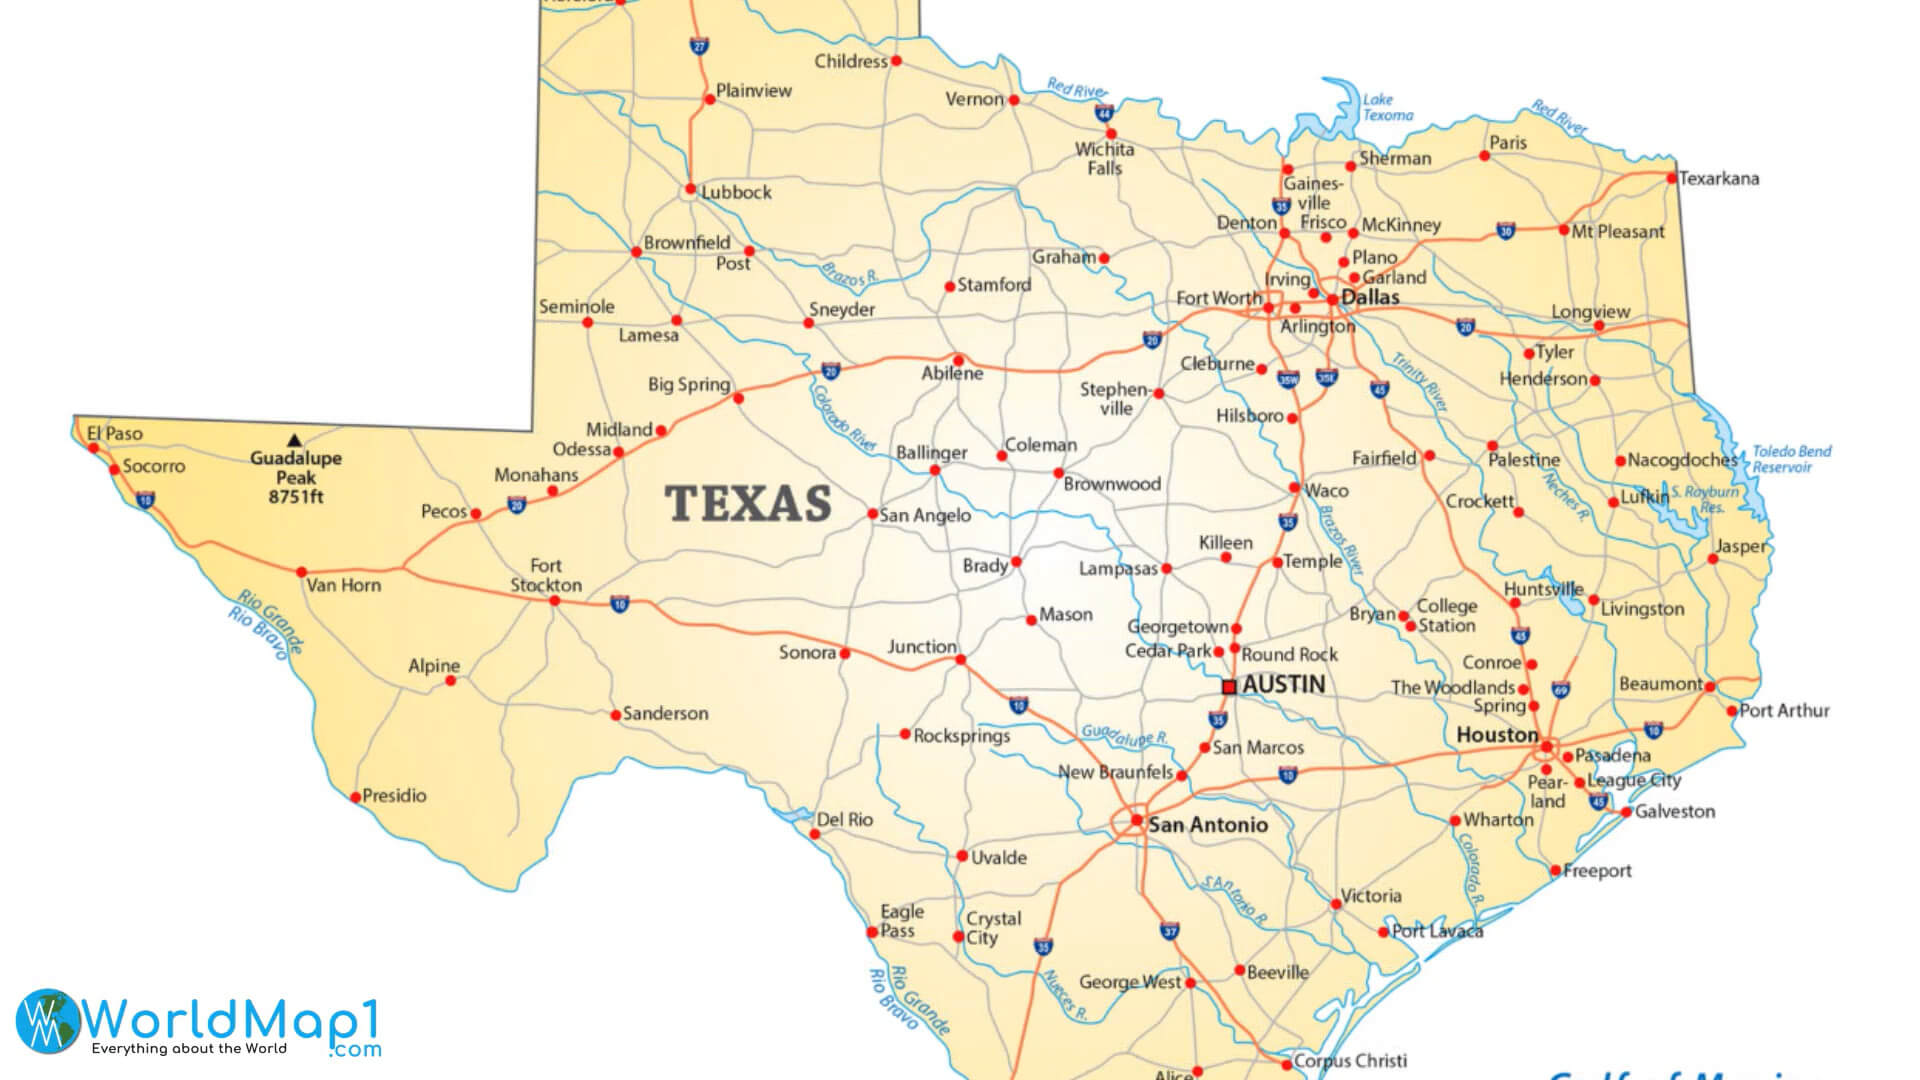 Austin Capital of Texas Map